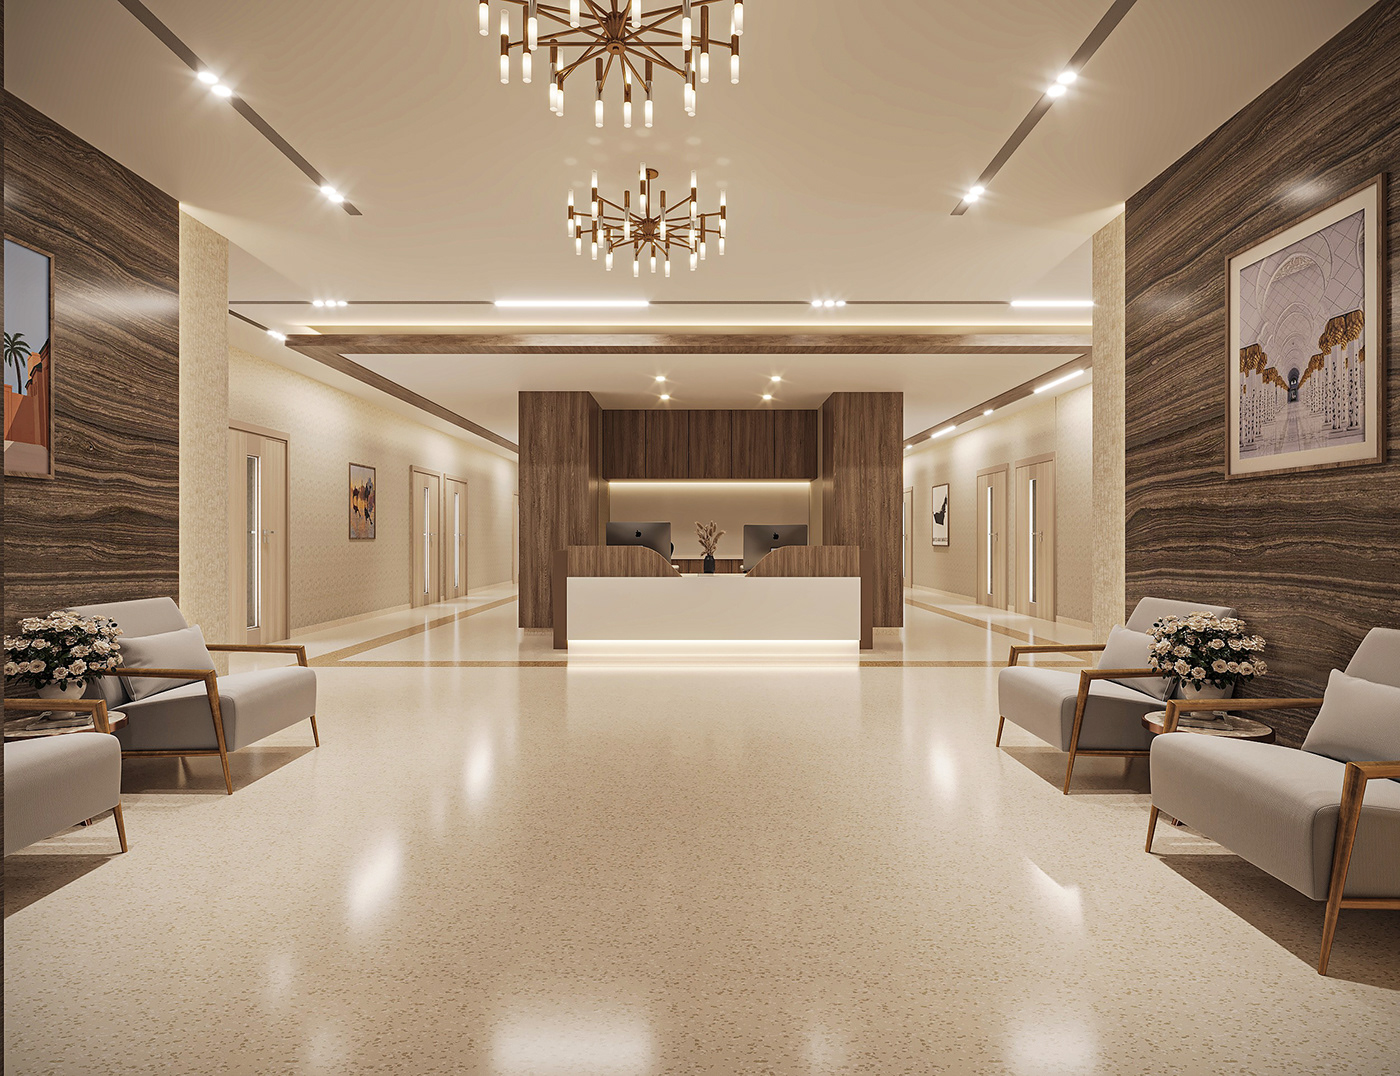 Interior 3ds max interior design  corona visualization architecture Render 3D archviz modern